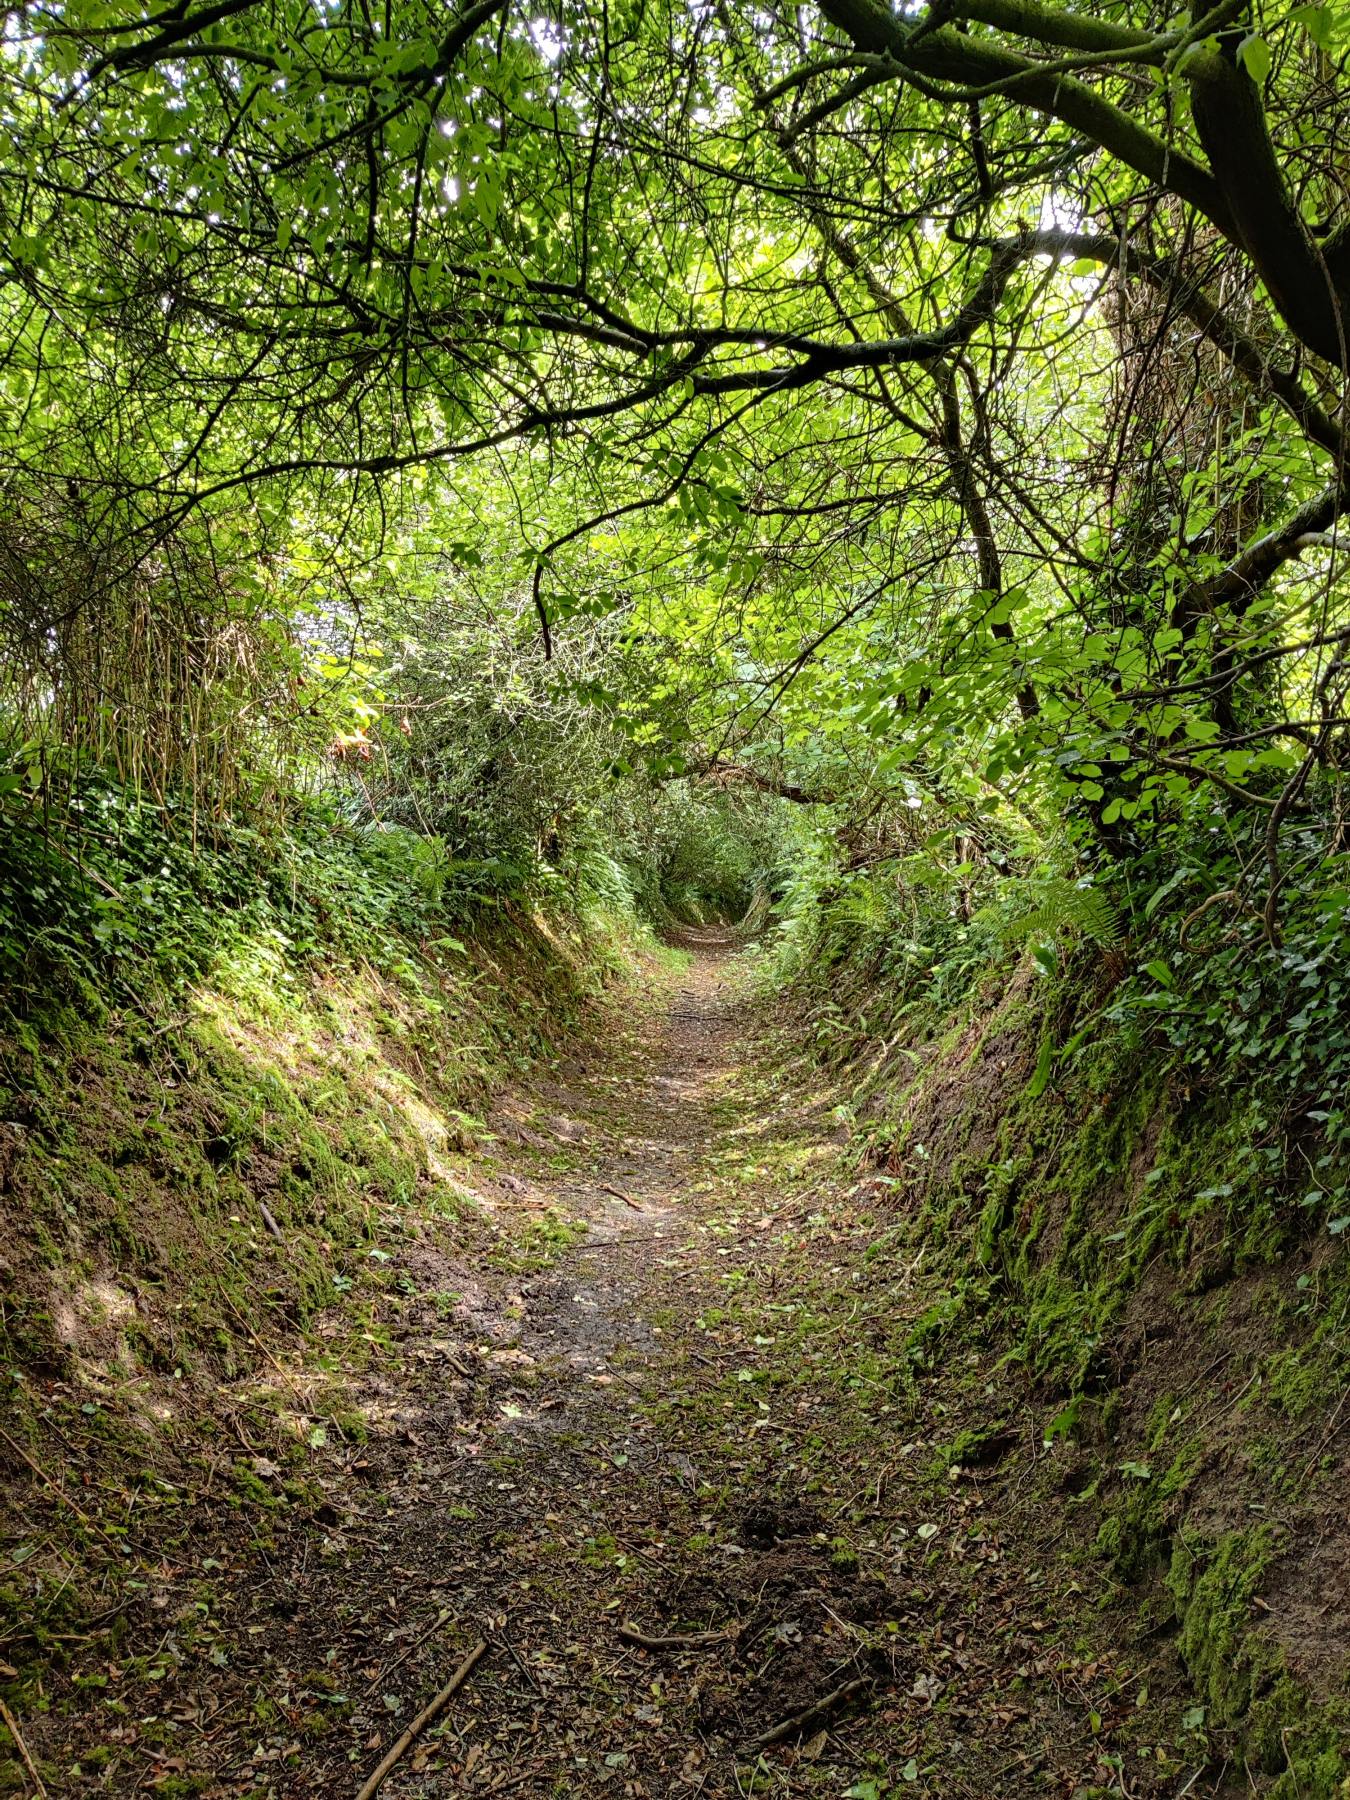 A narrow path leading through trees creating a circular burrow-like shape